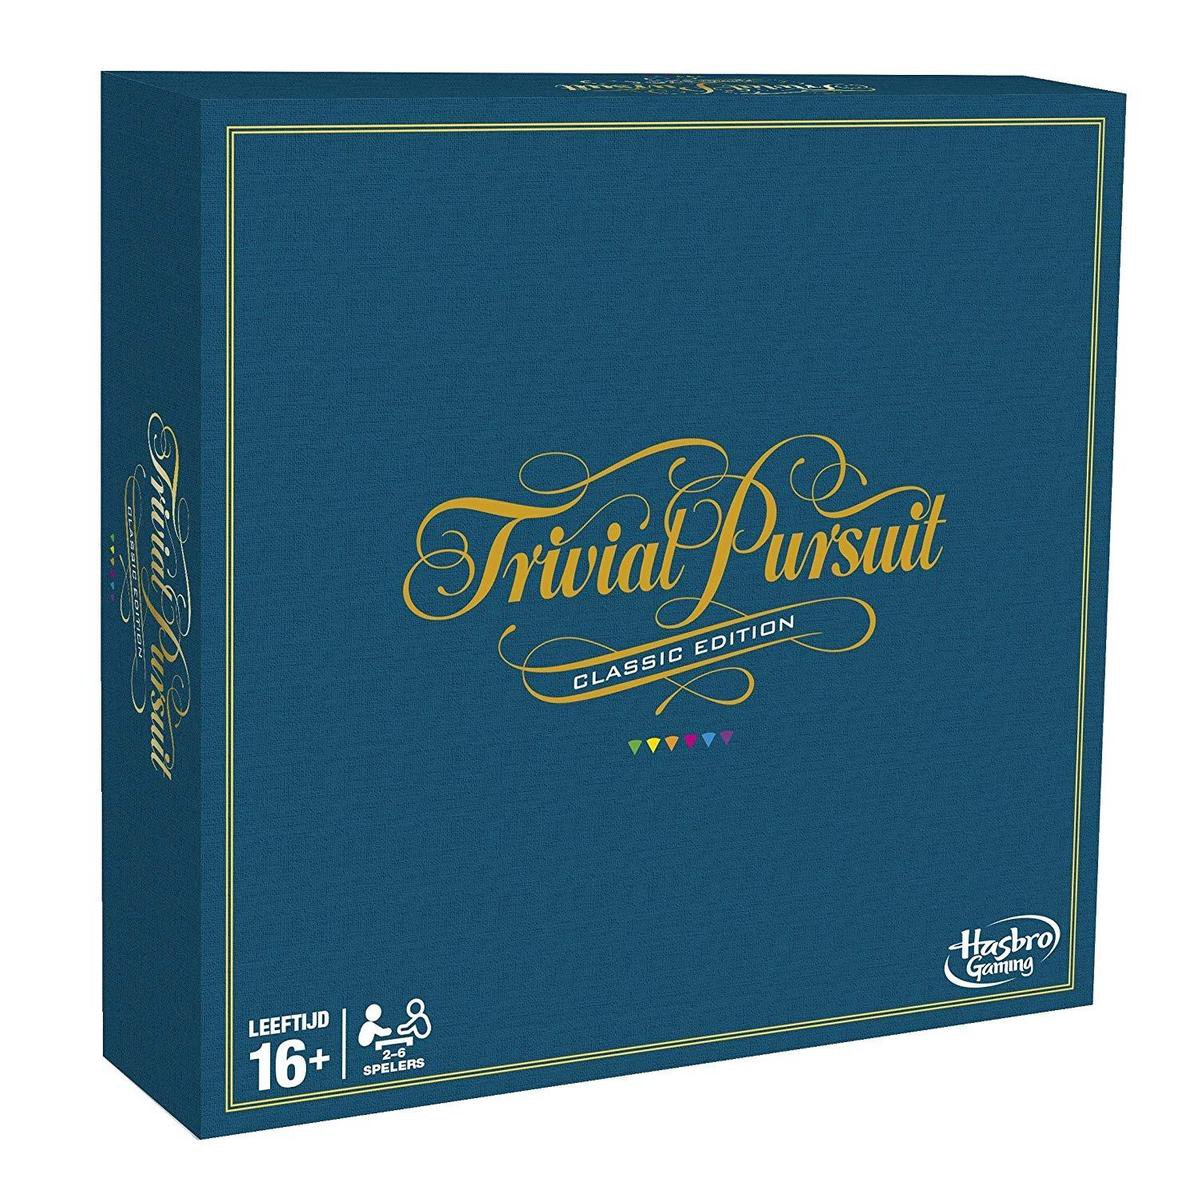 Trivial Pursuit Classic - Bordspel - Hasbro Gaming